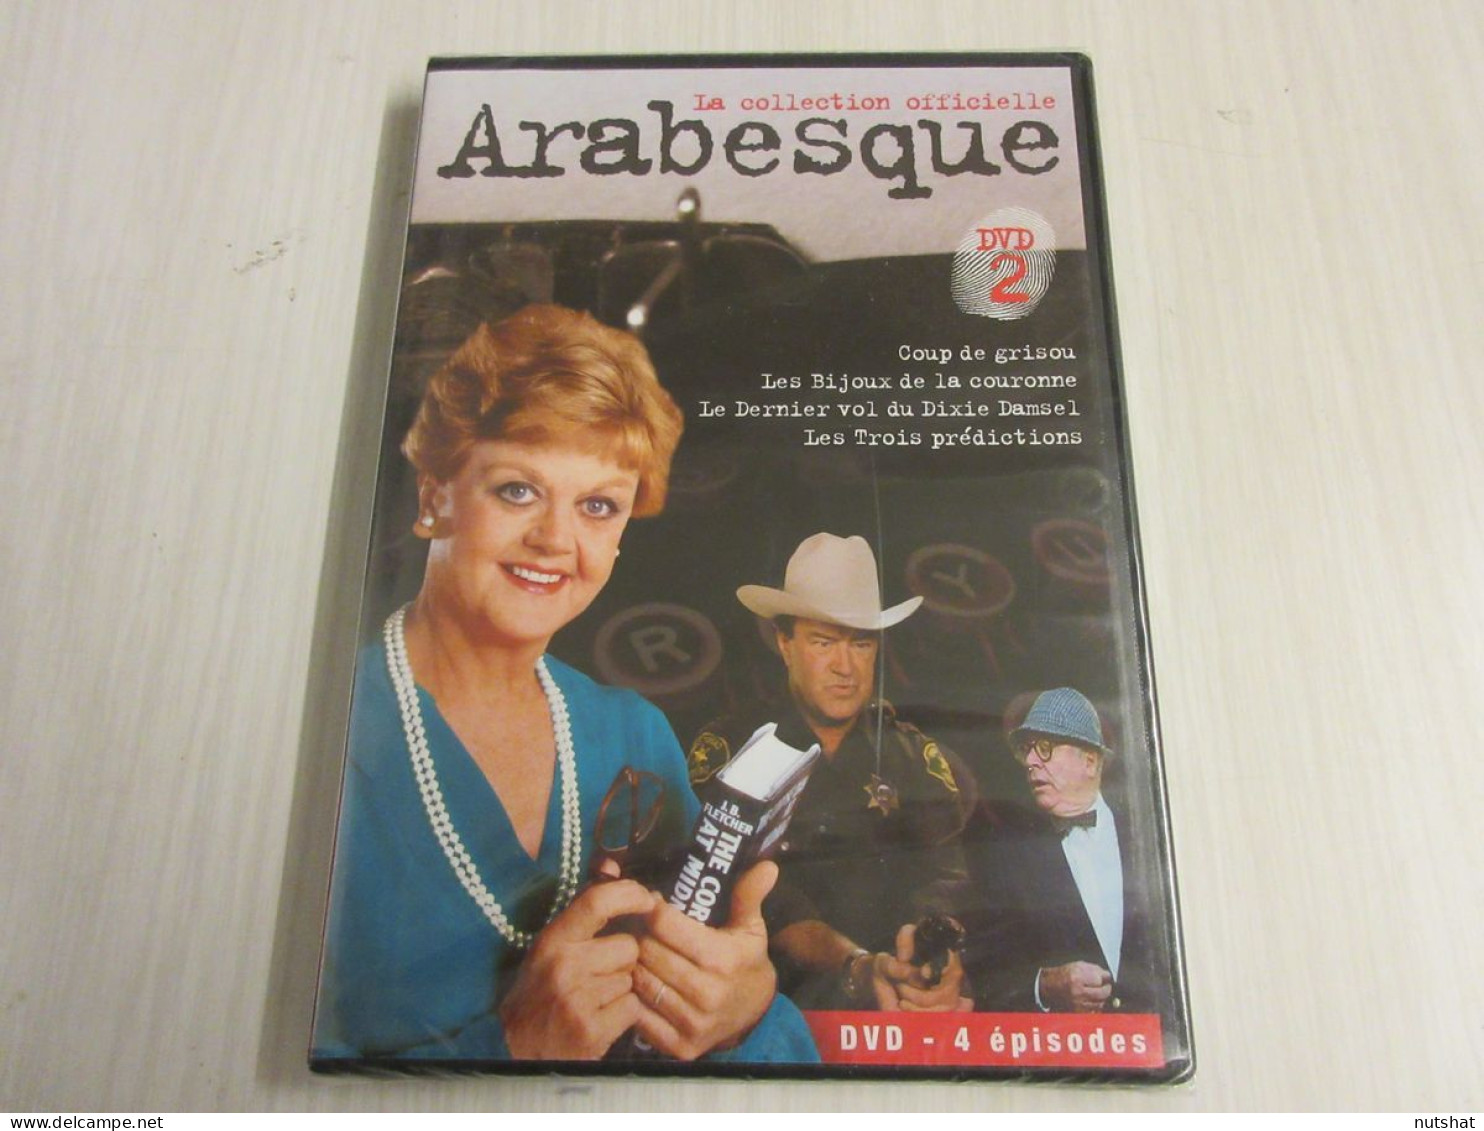 DVD SERIE TV ARABESQUE DVD2 4 épisodes Angela LANSBURY 2009 - TV Shows & Series